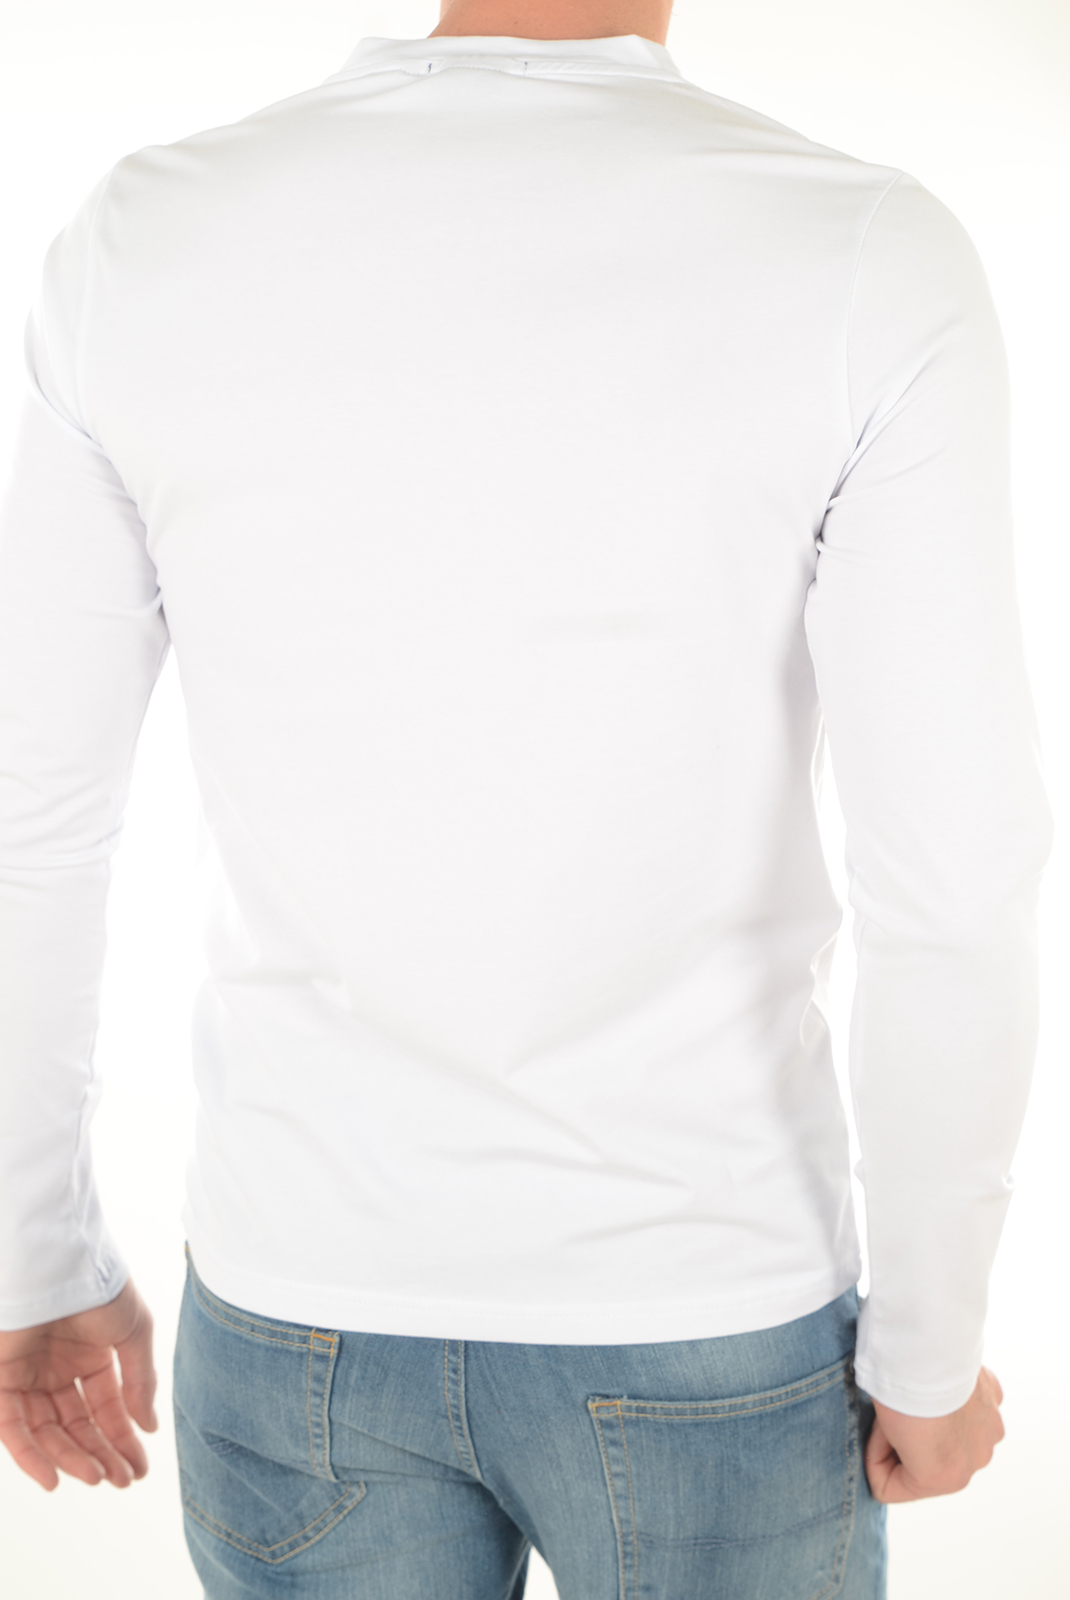 Redskins Tee-shirt Blanc Wow Warner Col Montant Zippé